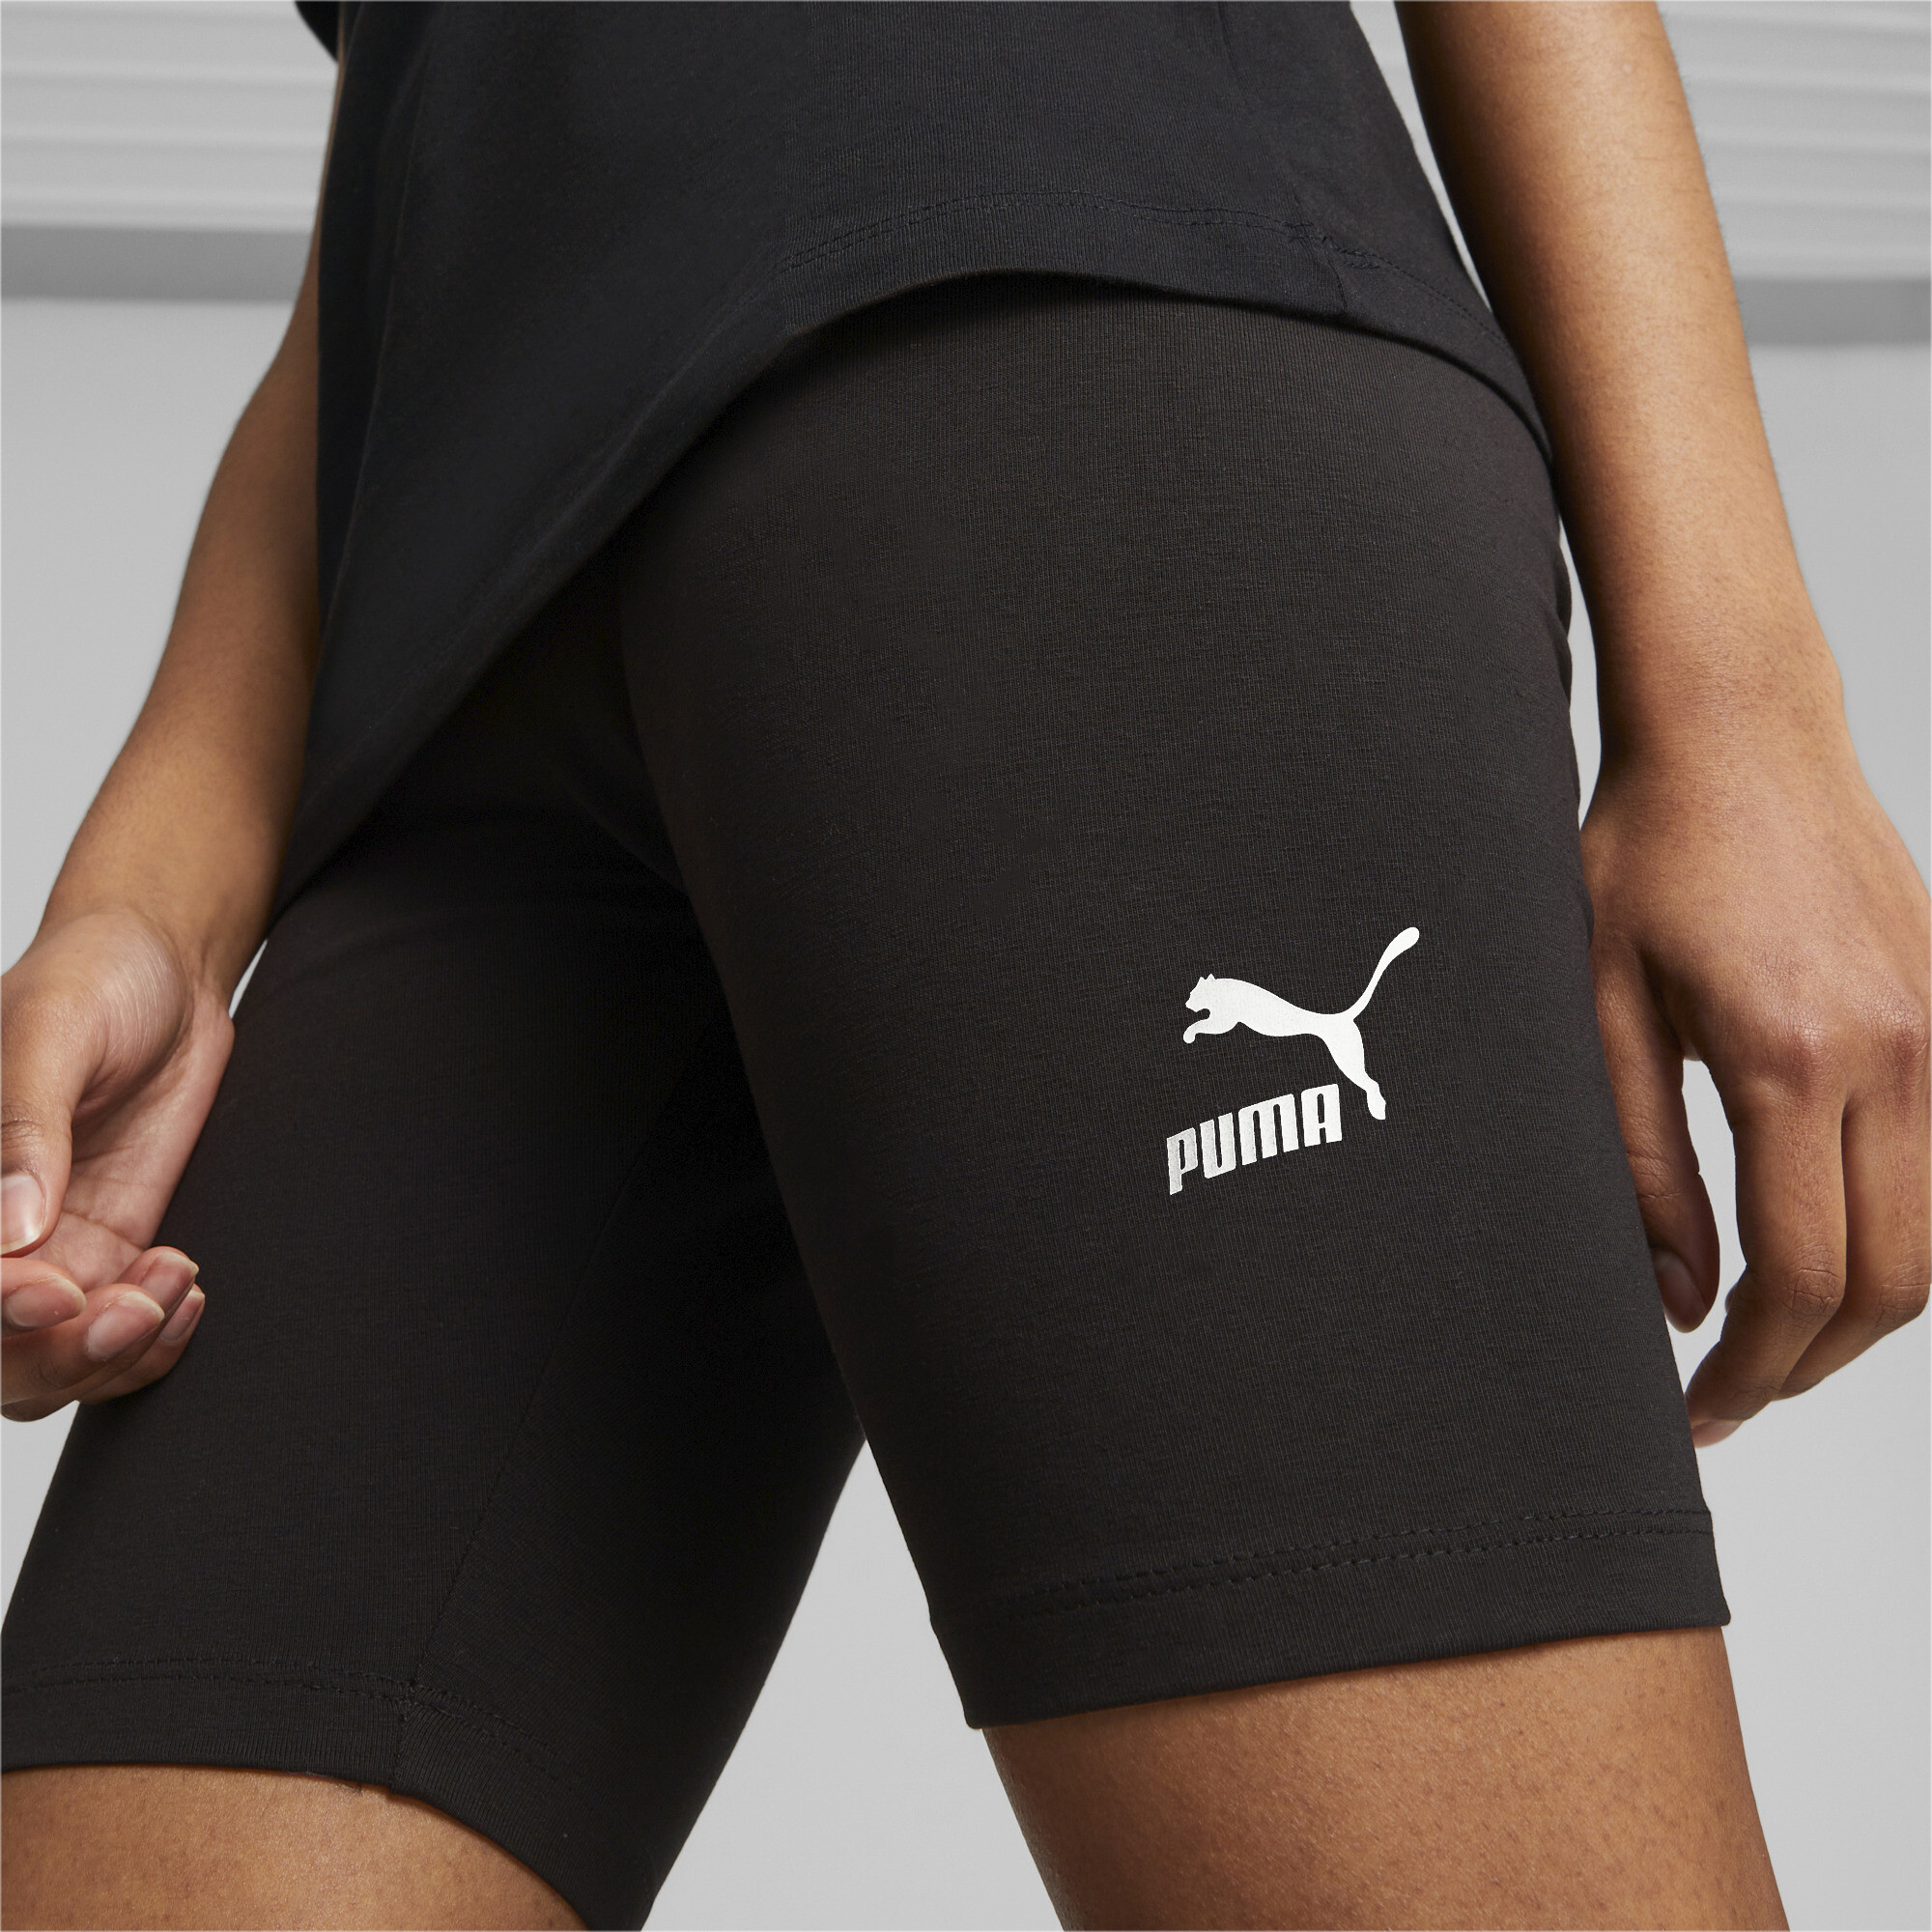 Women's Puma Classics's Short Leggings, Black, Size M, Clothing